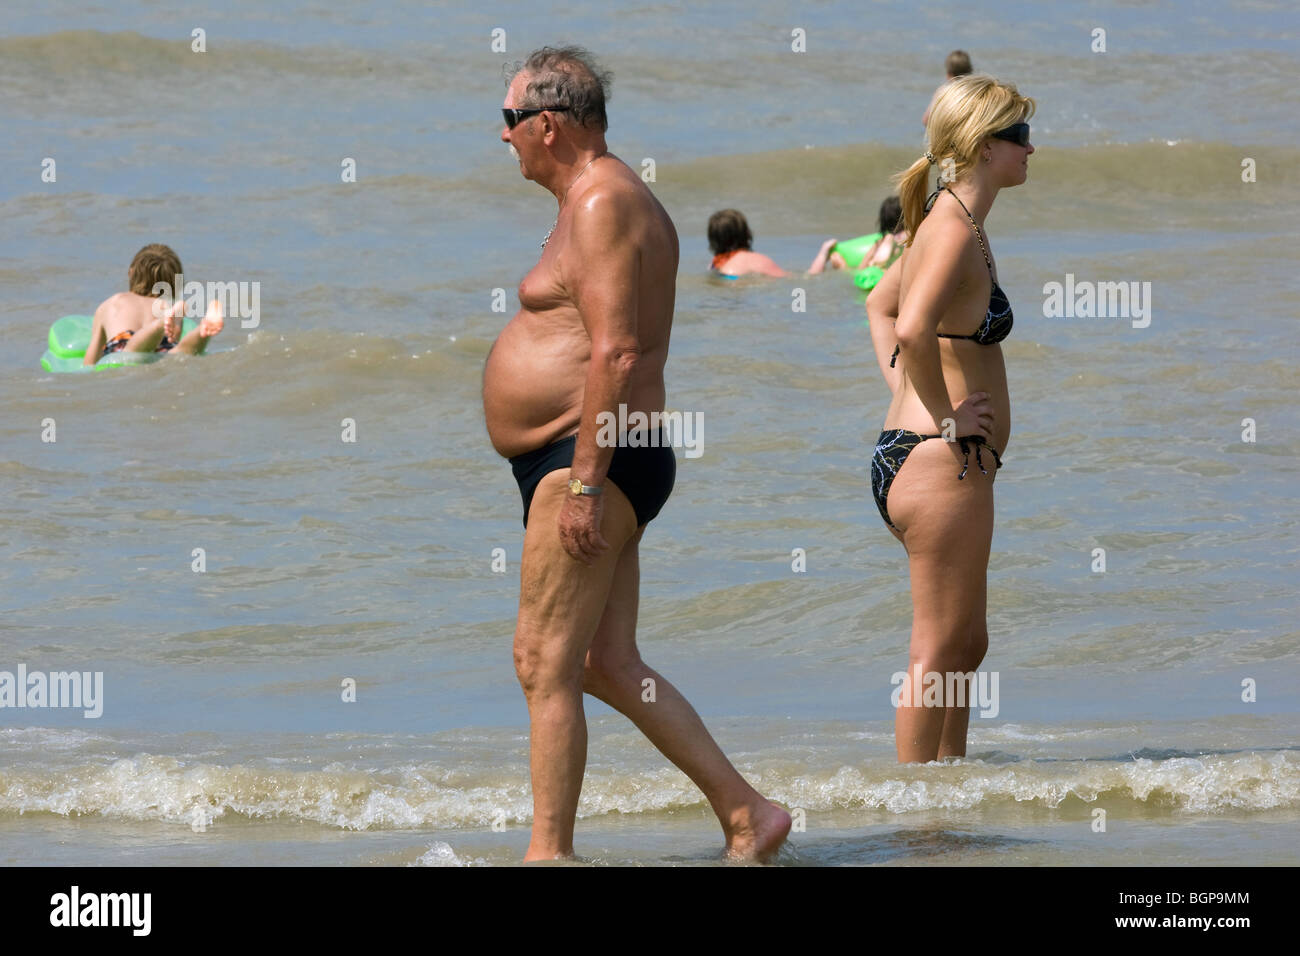 Fat woman bikini beach hi-res stock photography and images - Alamy